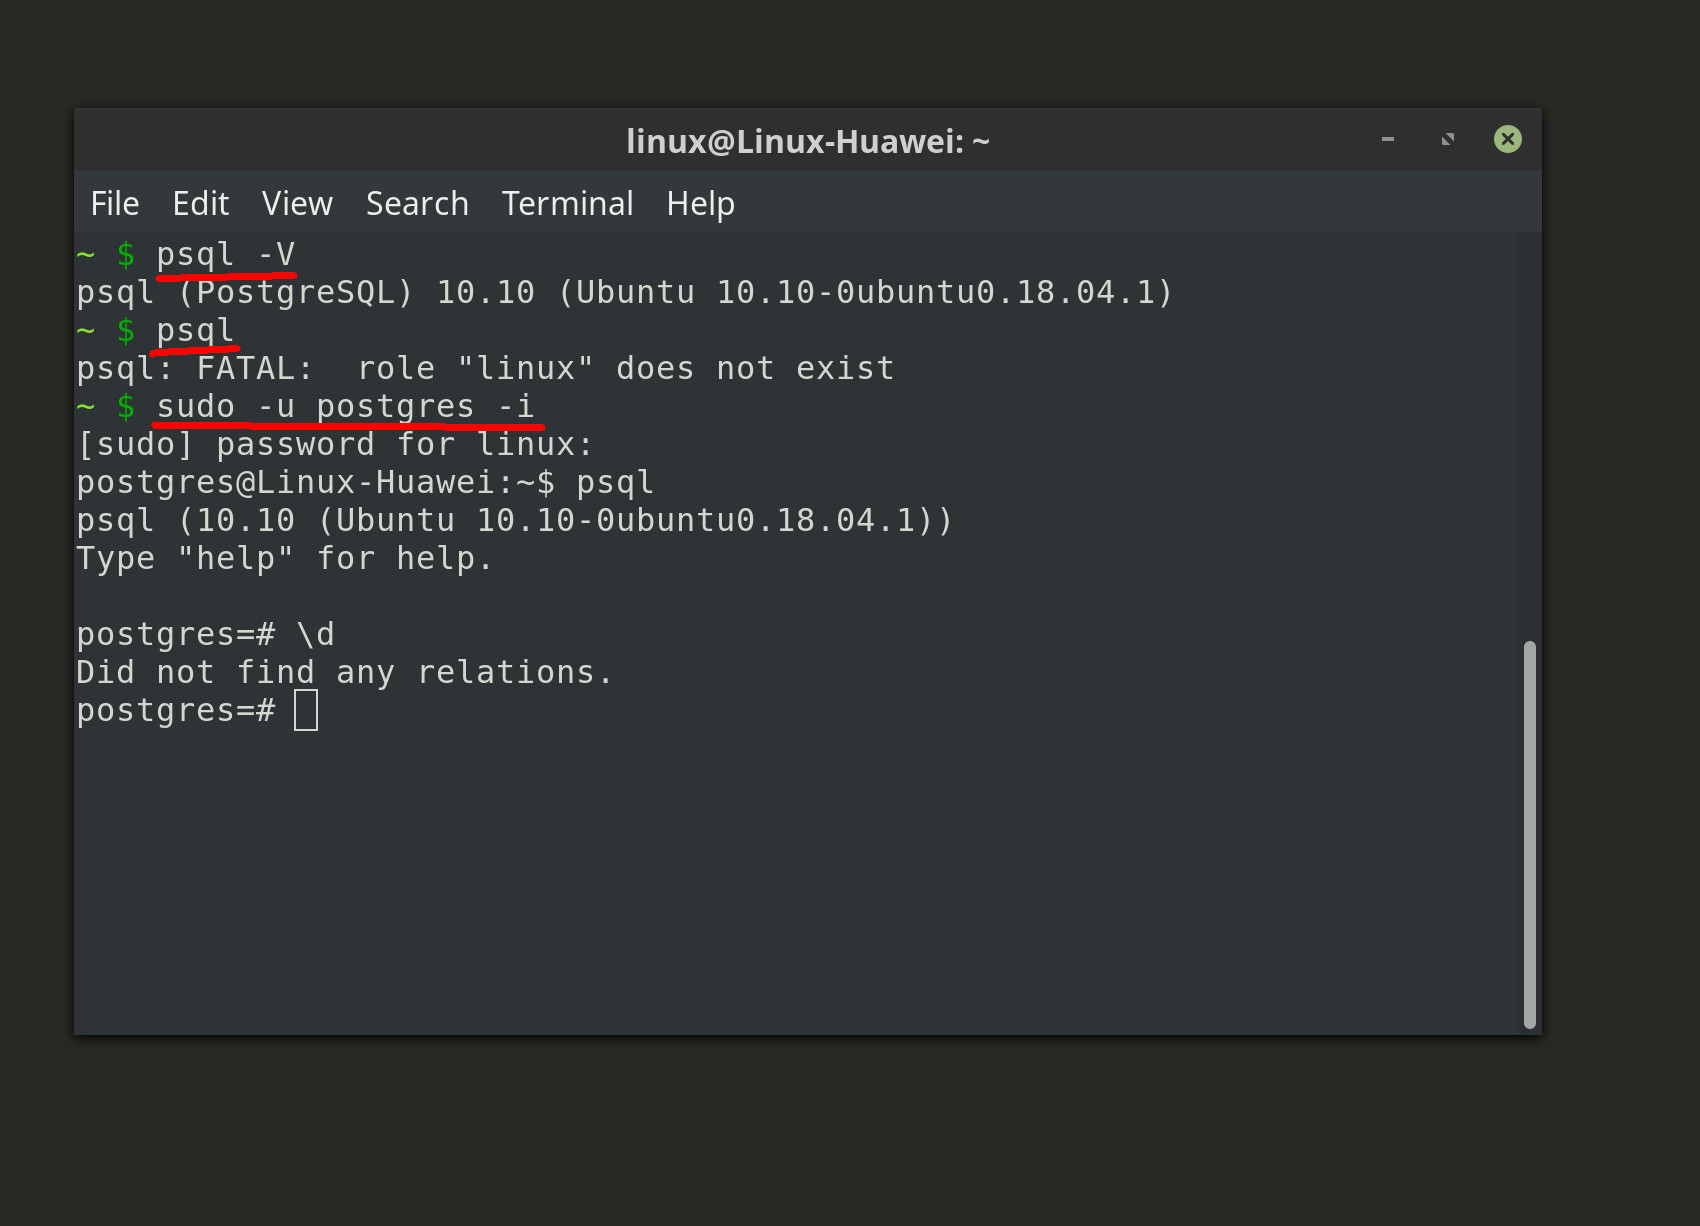  Screenshot verze psql a role "linux" neexistuje chyba pro Postgres